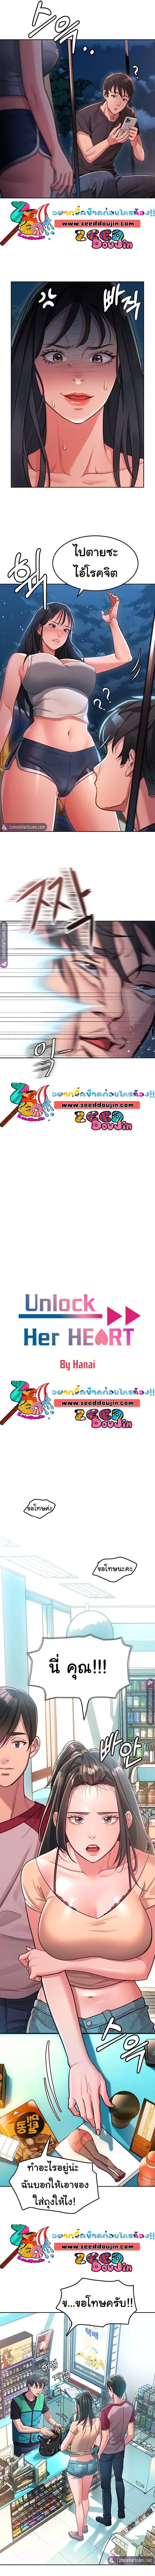 Unlock-Her-Heart--1-3.jpg